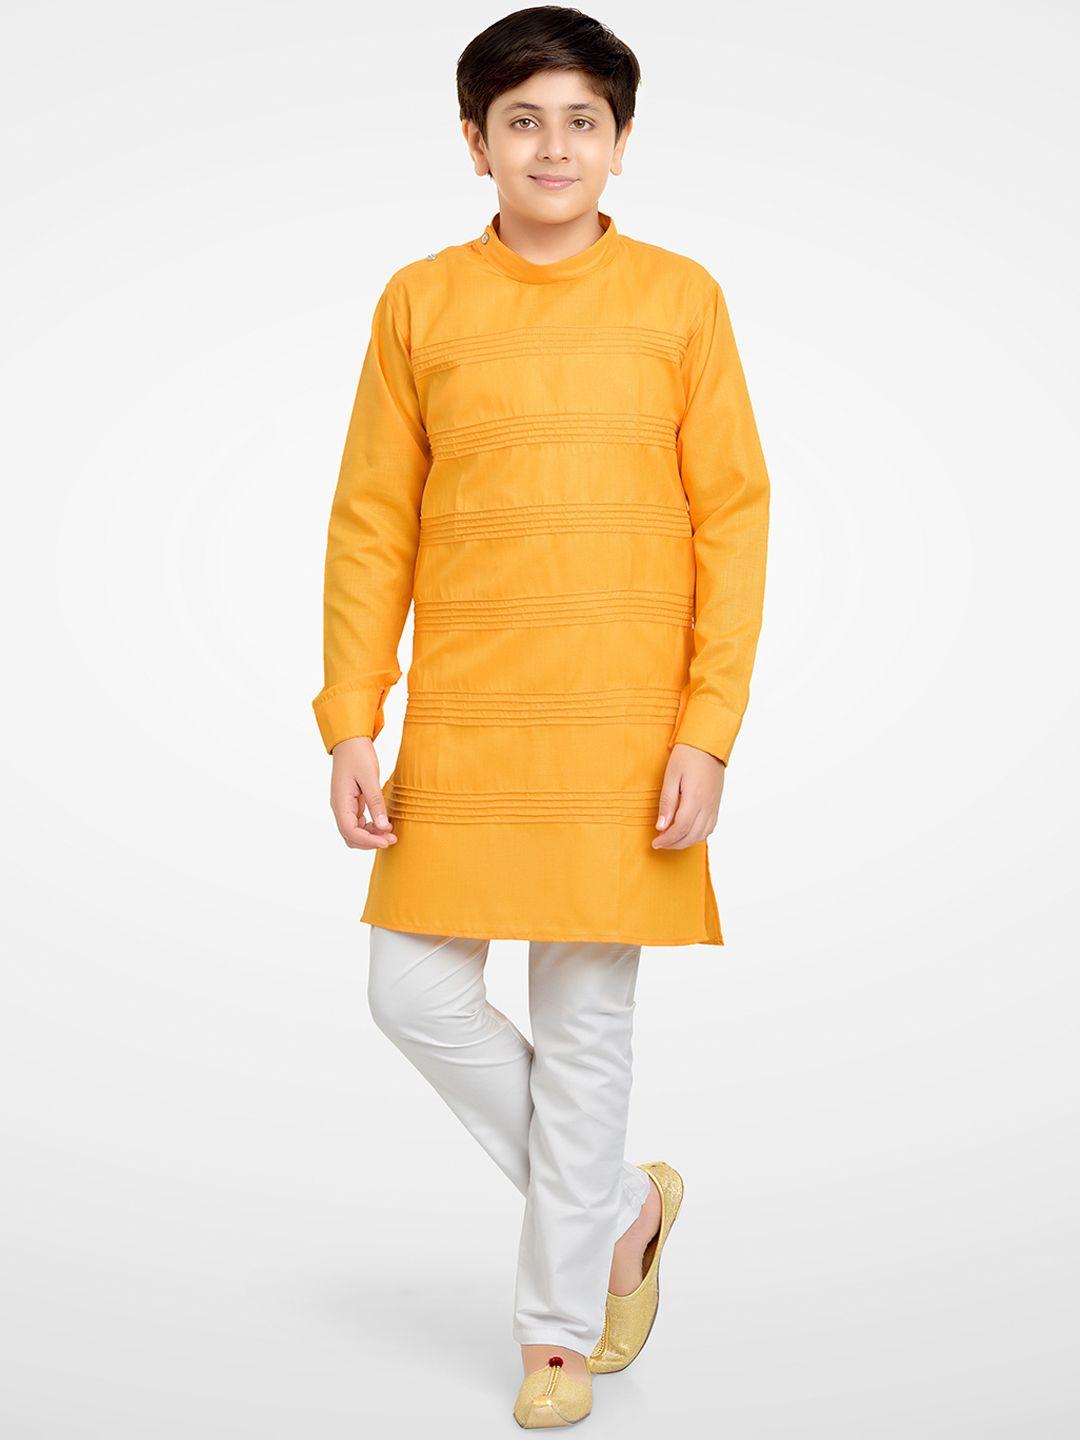 jeetethnics boys orange & white kurta with pyjamas